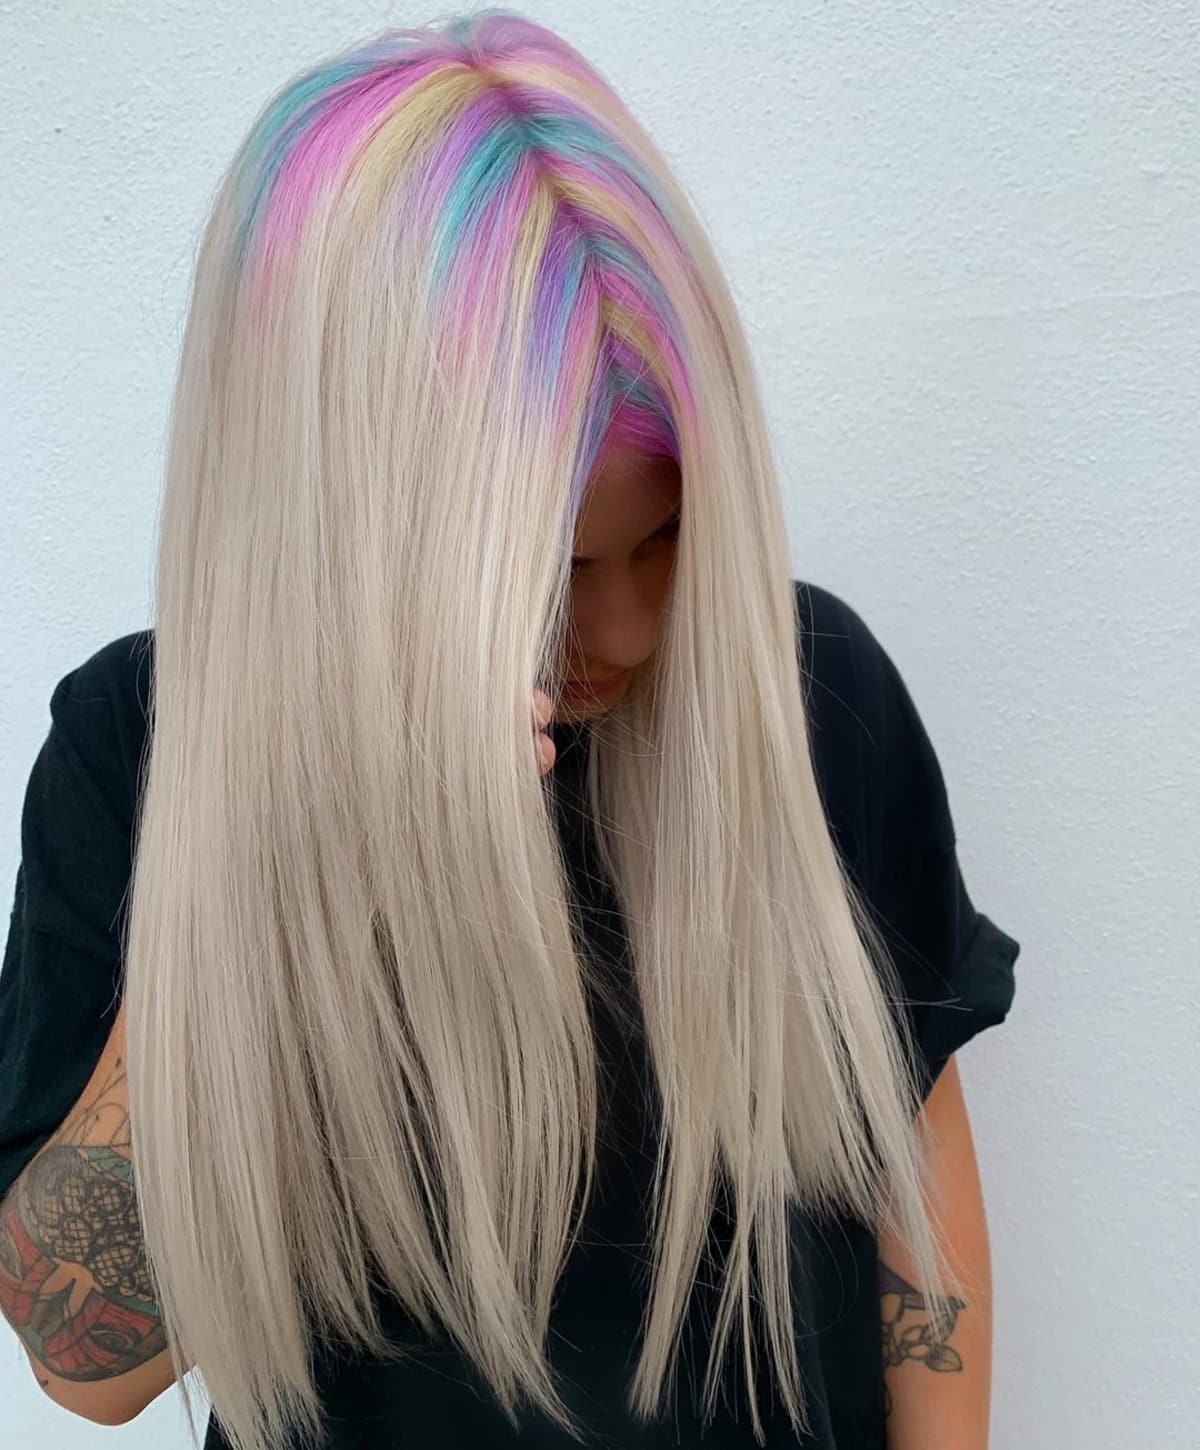 Holographic rainbow hair